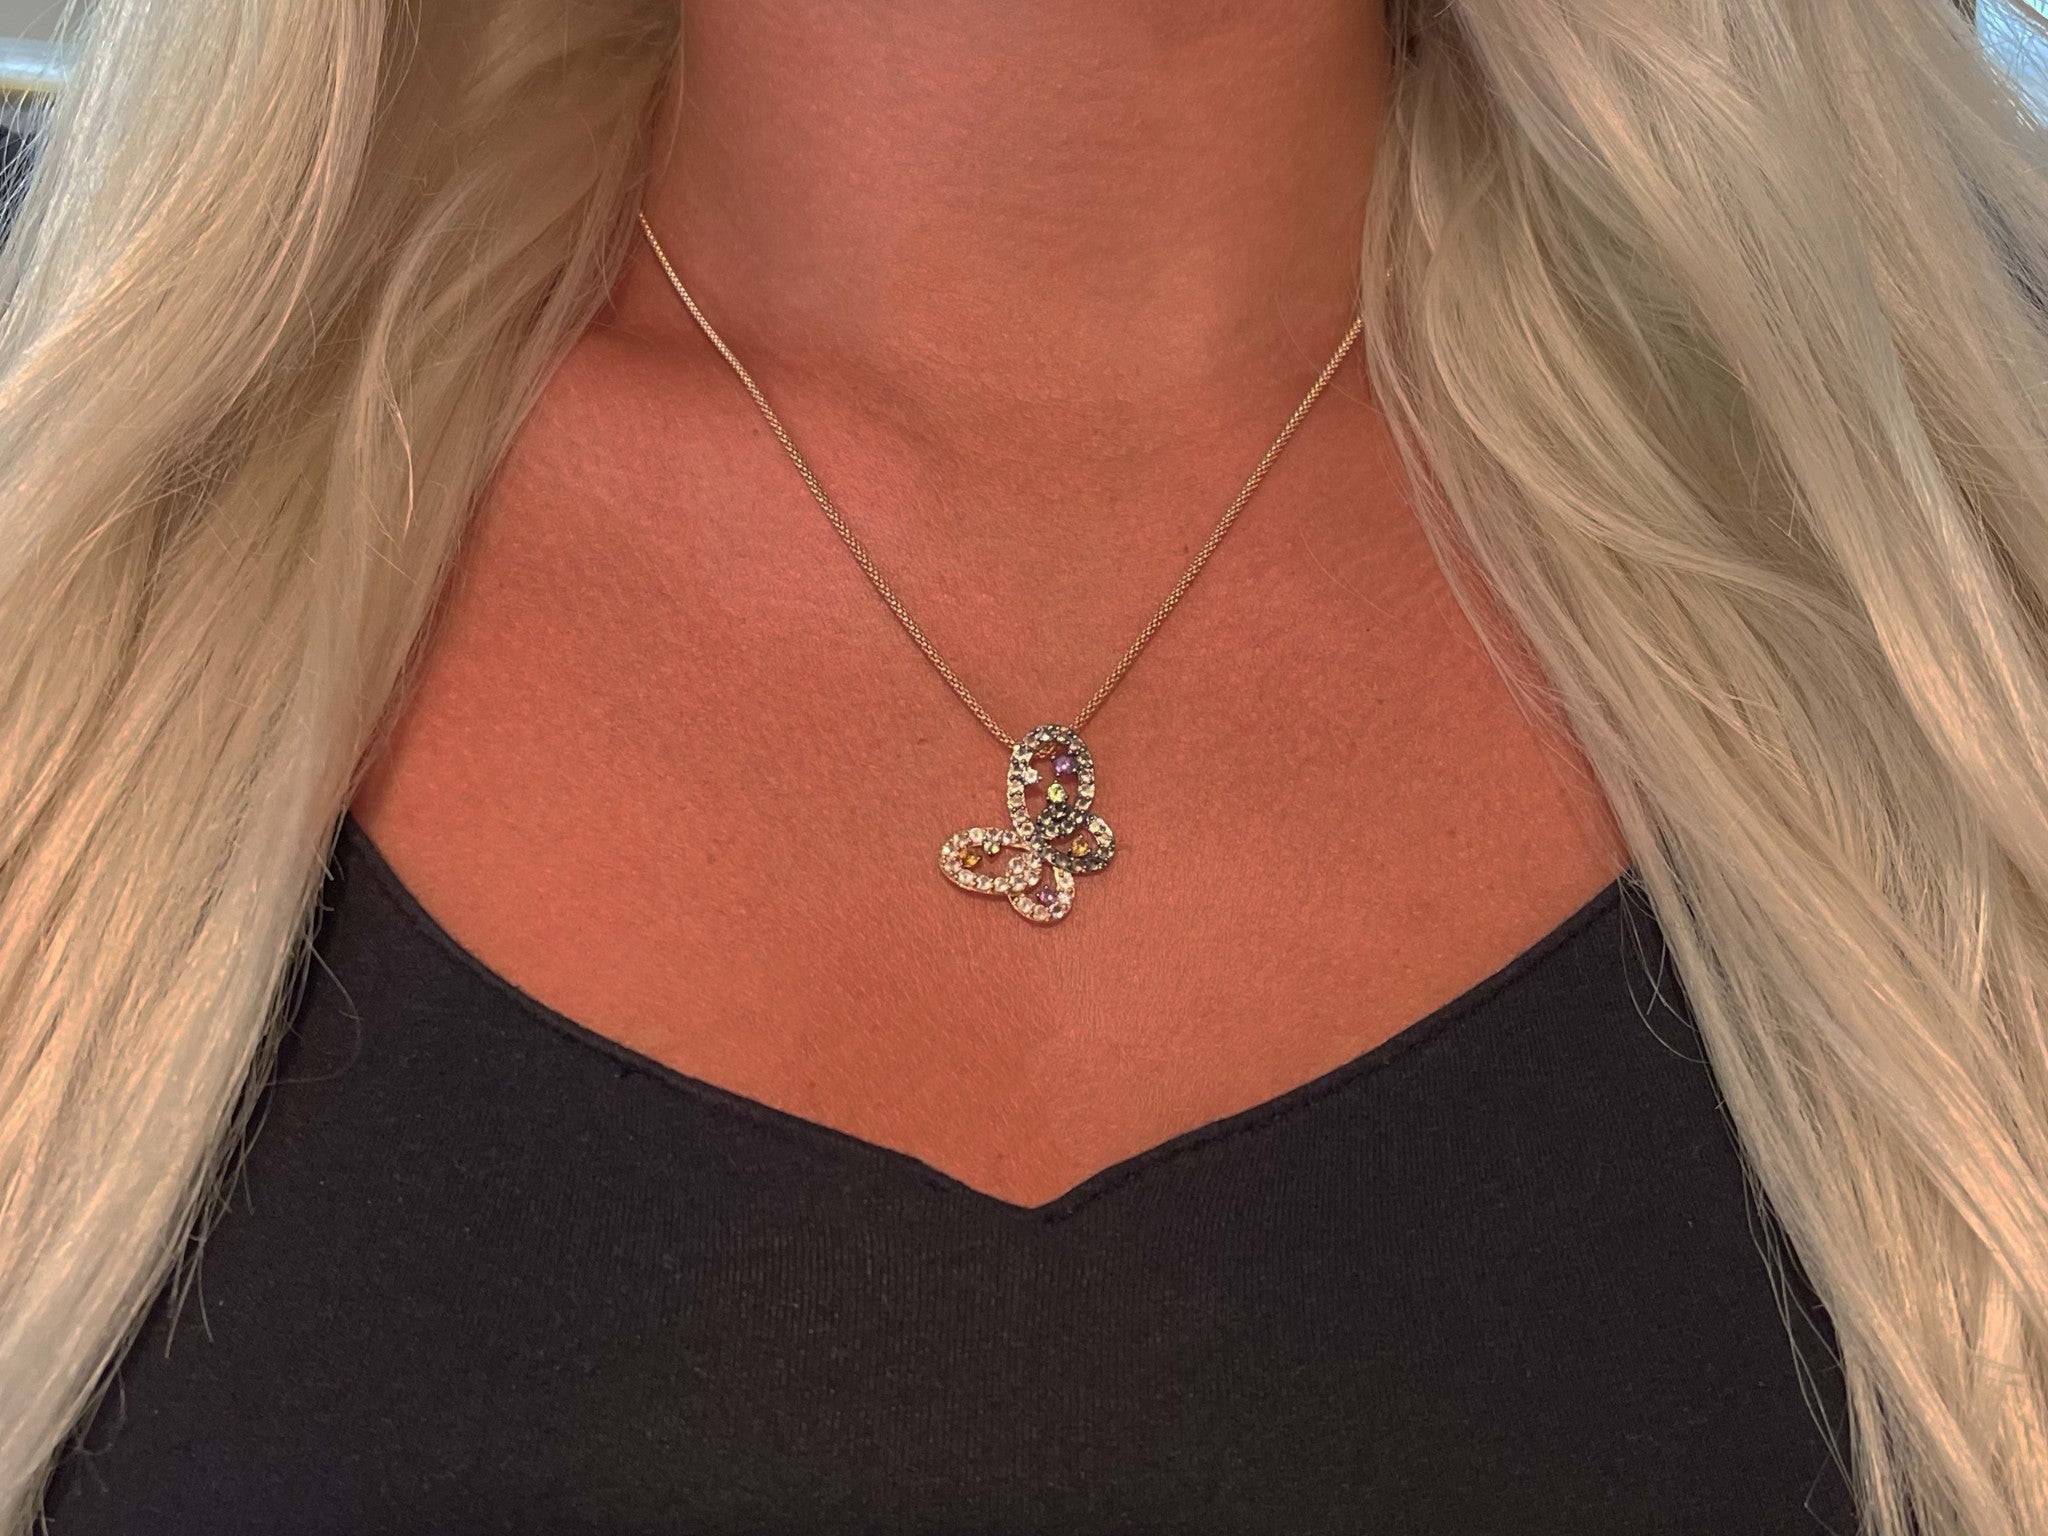 LeVian Multi Gemstone Butterfly Necklace in 14K Rose Gold